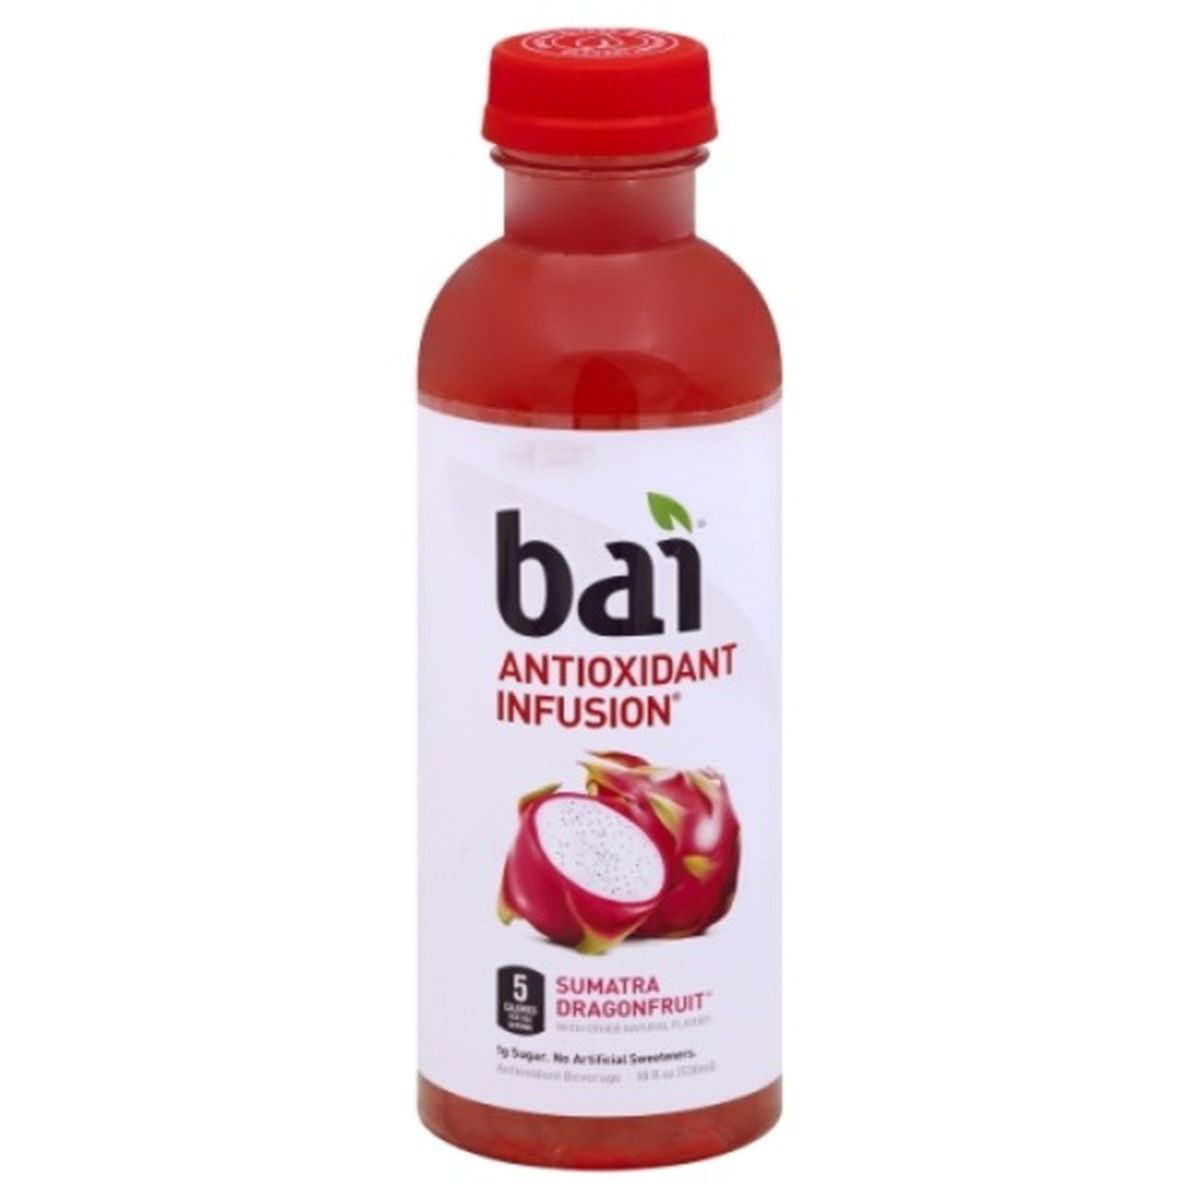 Calories in Bai Antioxidant Infusion, Sumatra Dragonfruit